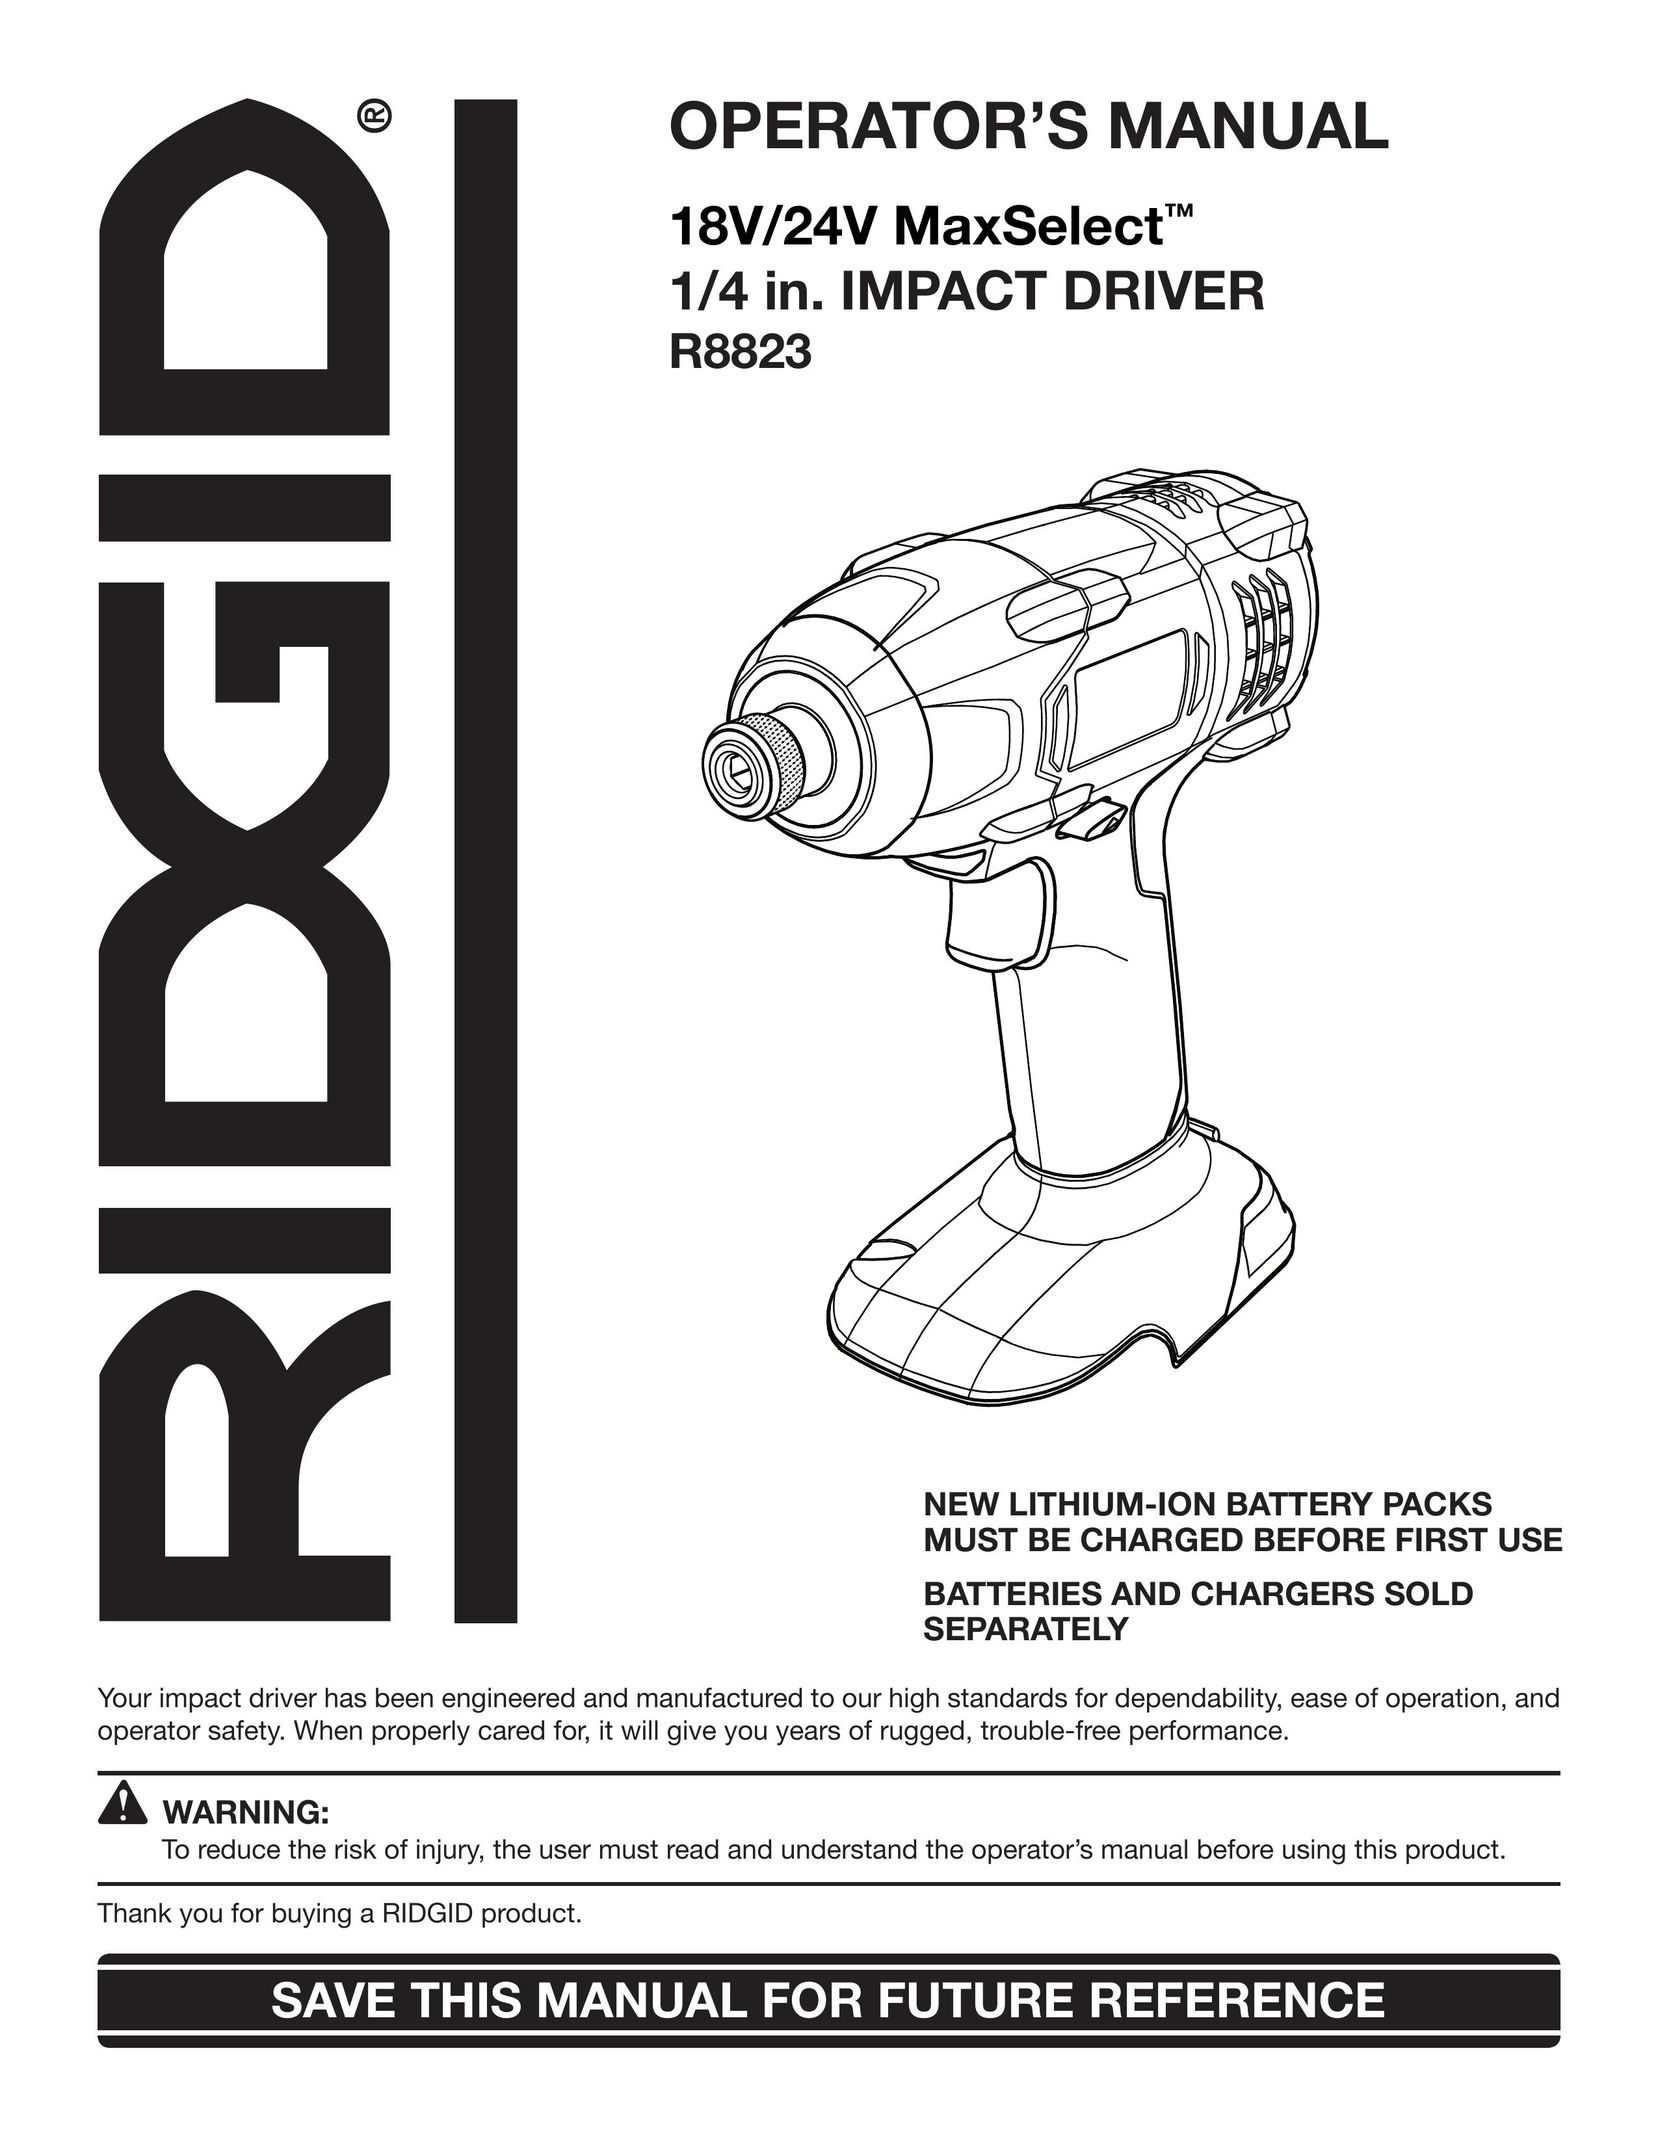 RIDGID R8823 Impact Driver User Manual